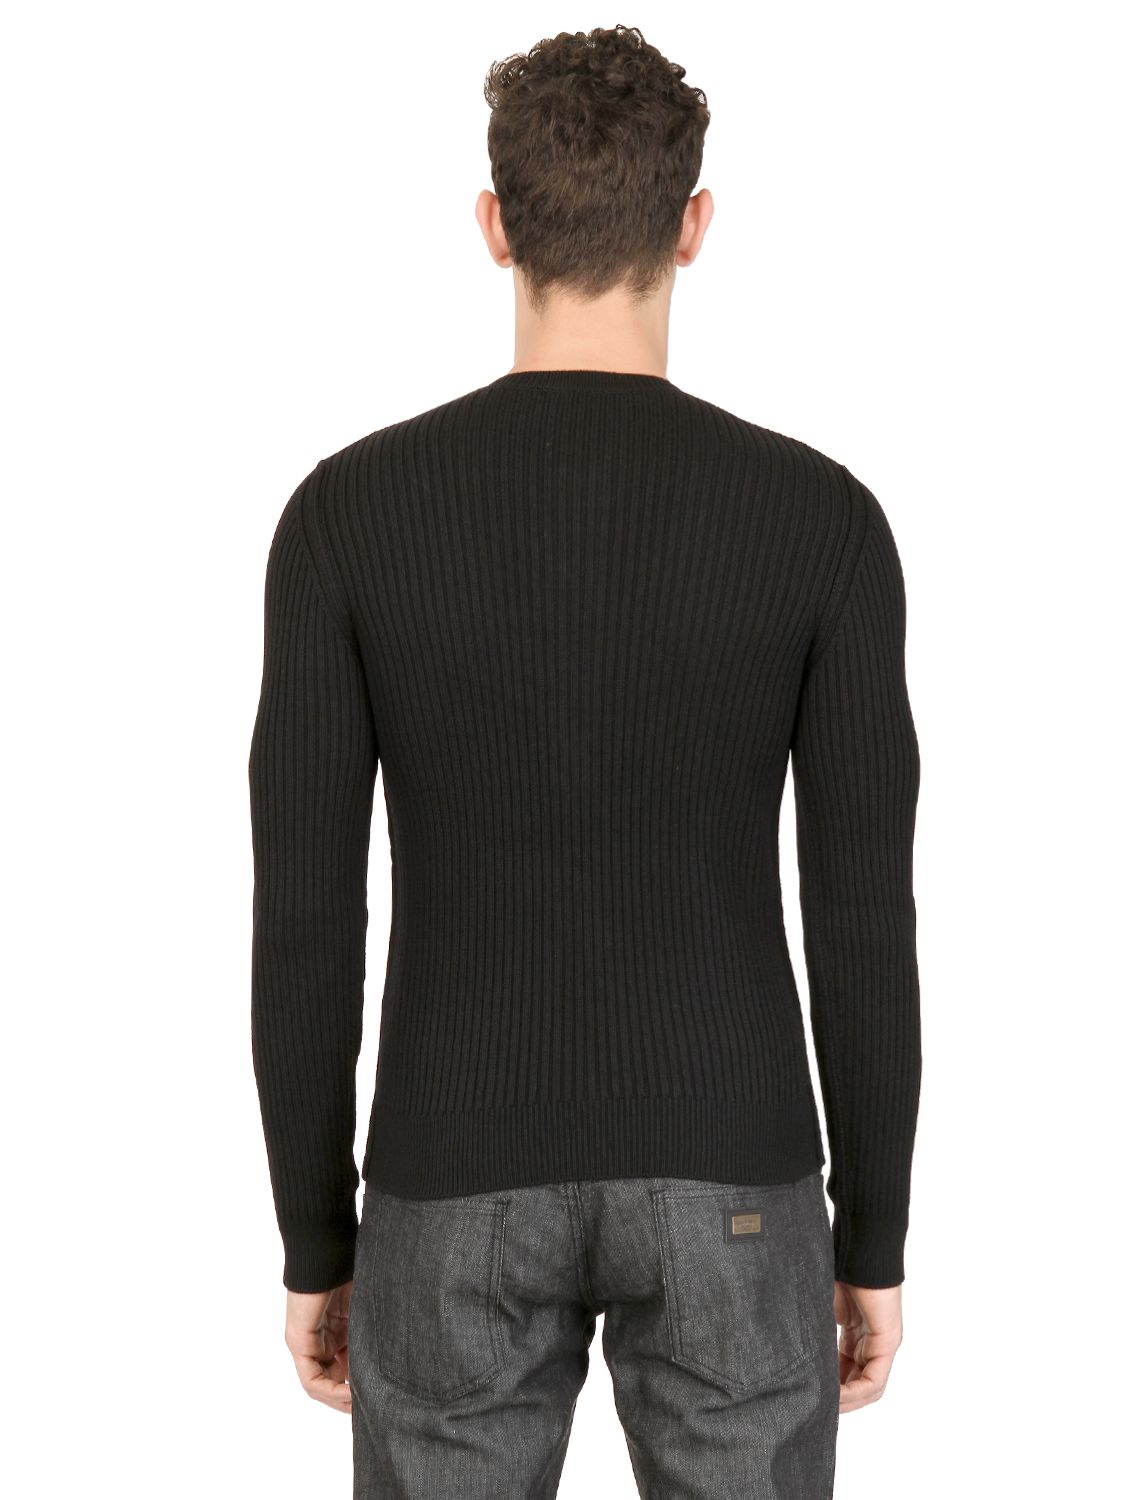 Lyst - Dolce & Gabbana Ribbed Merino Wool Henley Sweater in Black for Men